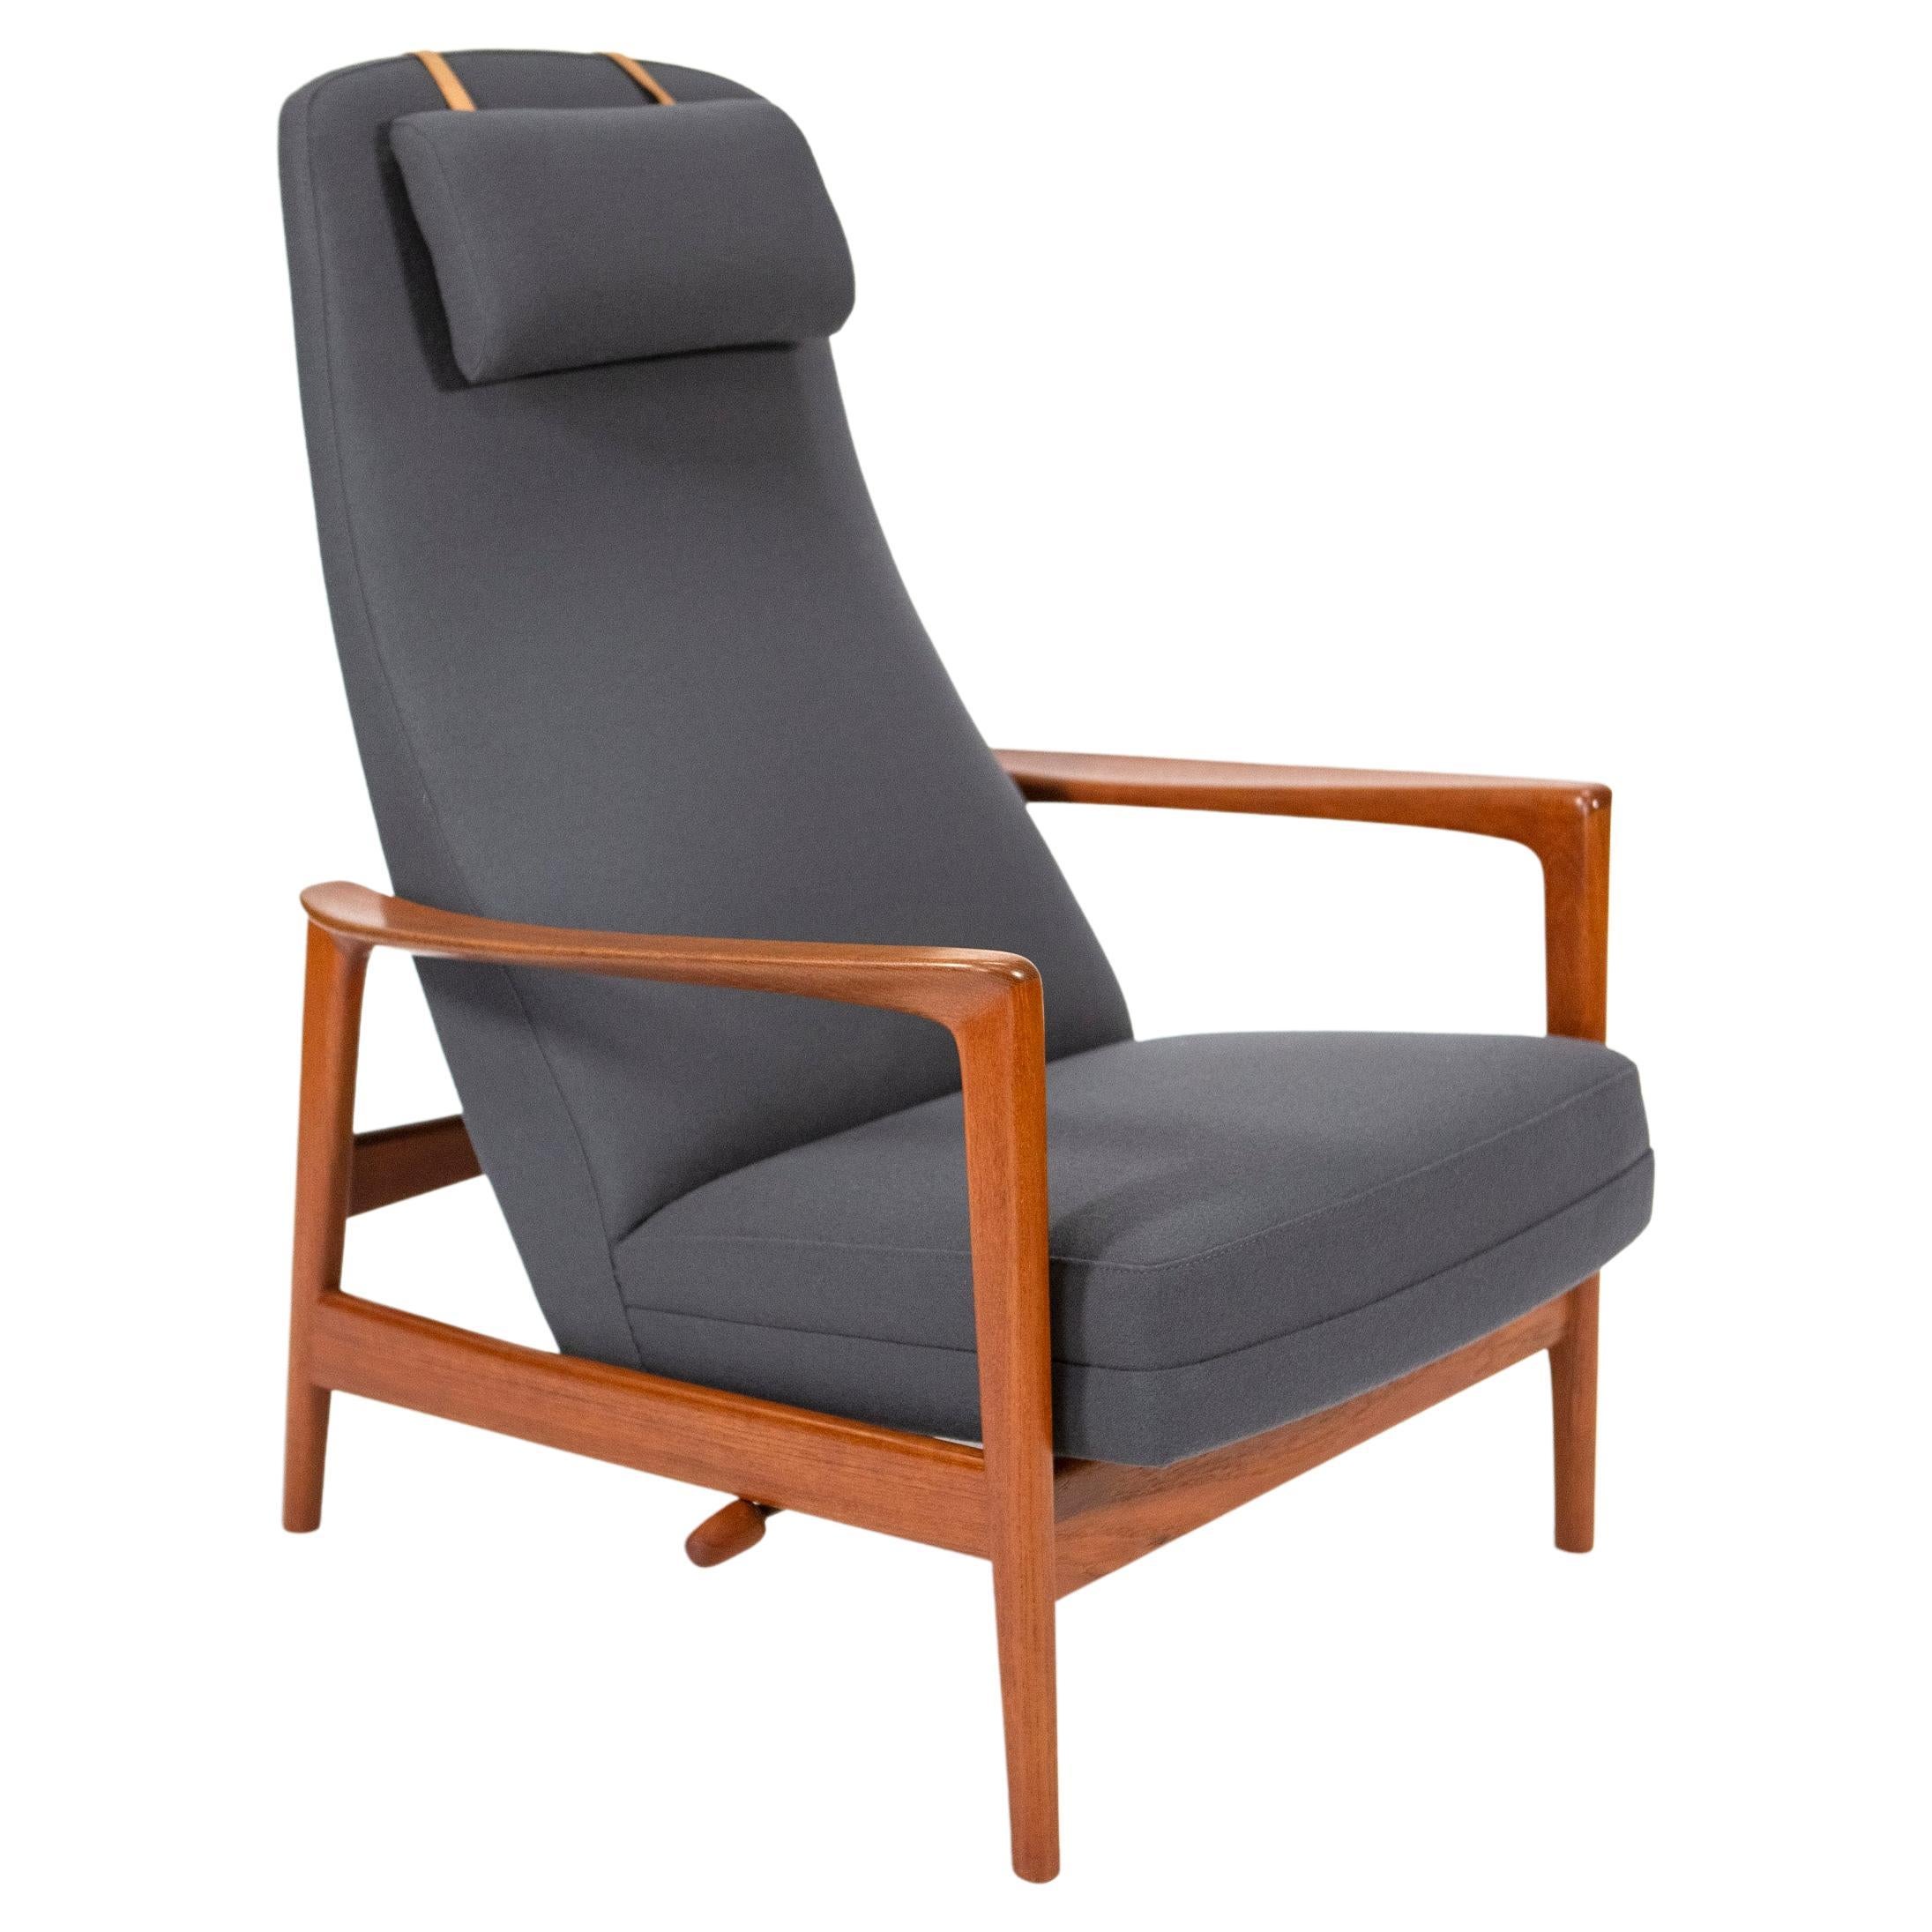 Folke Ohlsson teak 'Duxiesta' Adjustable Arm Chair by DUX - Sweden 1960's